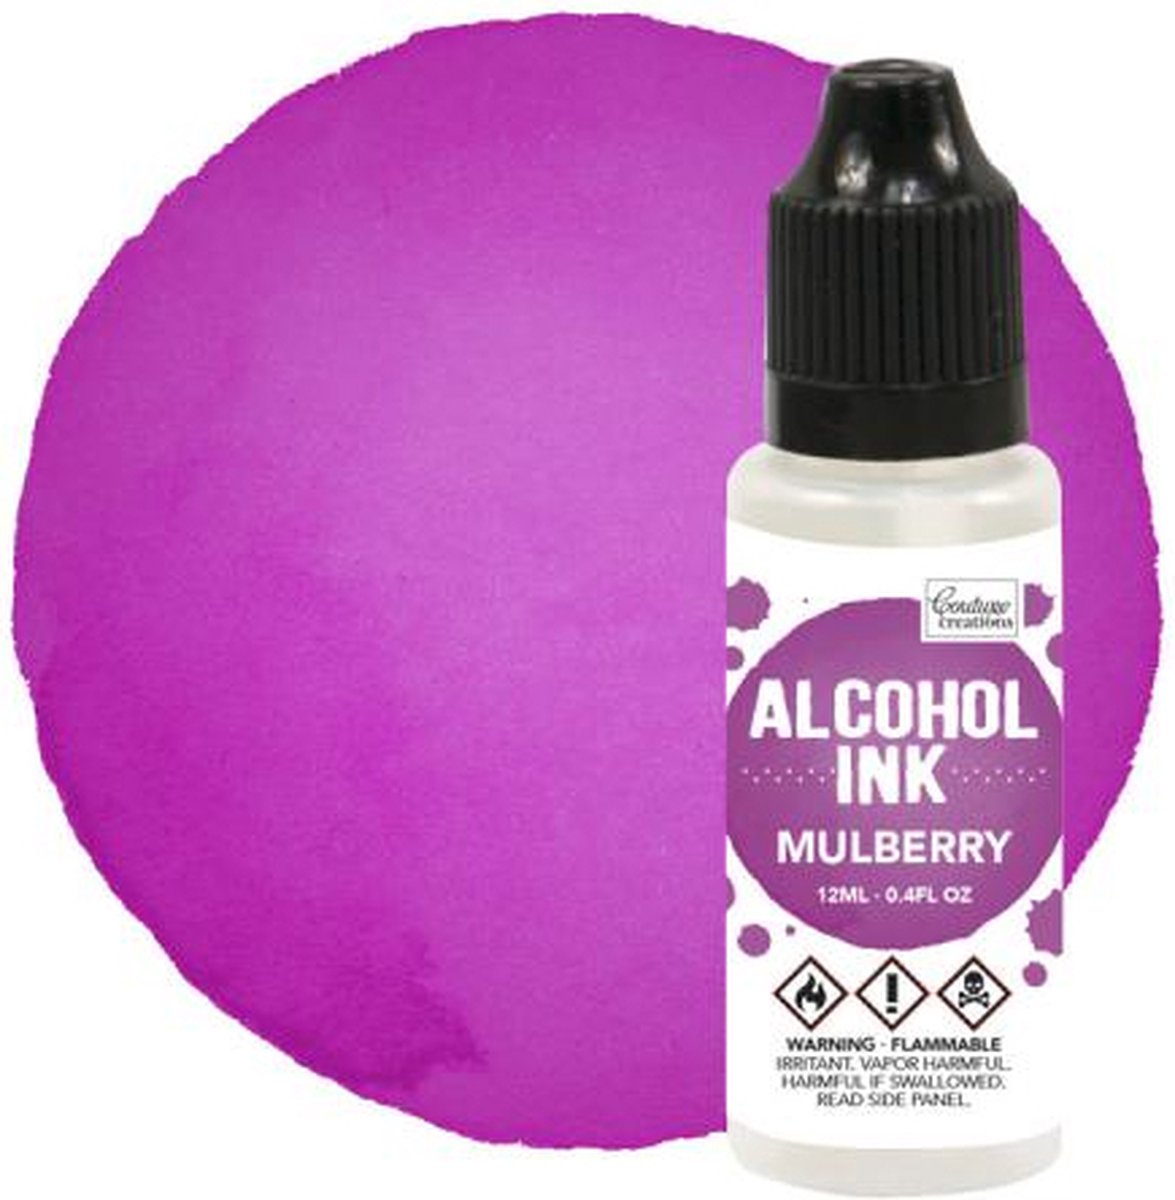 Alcohol Ink Raspberry / Mulberry (12mL | 0.4fl oz)